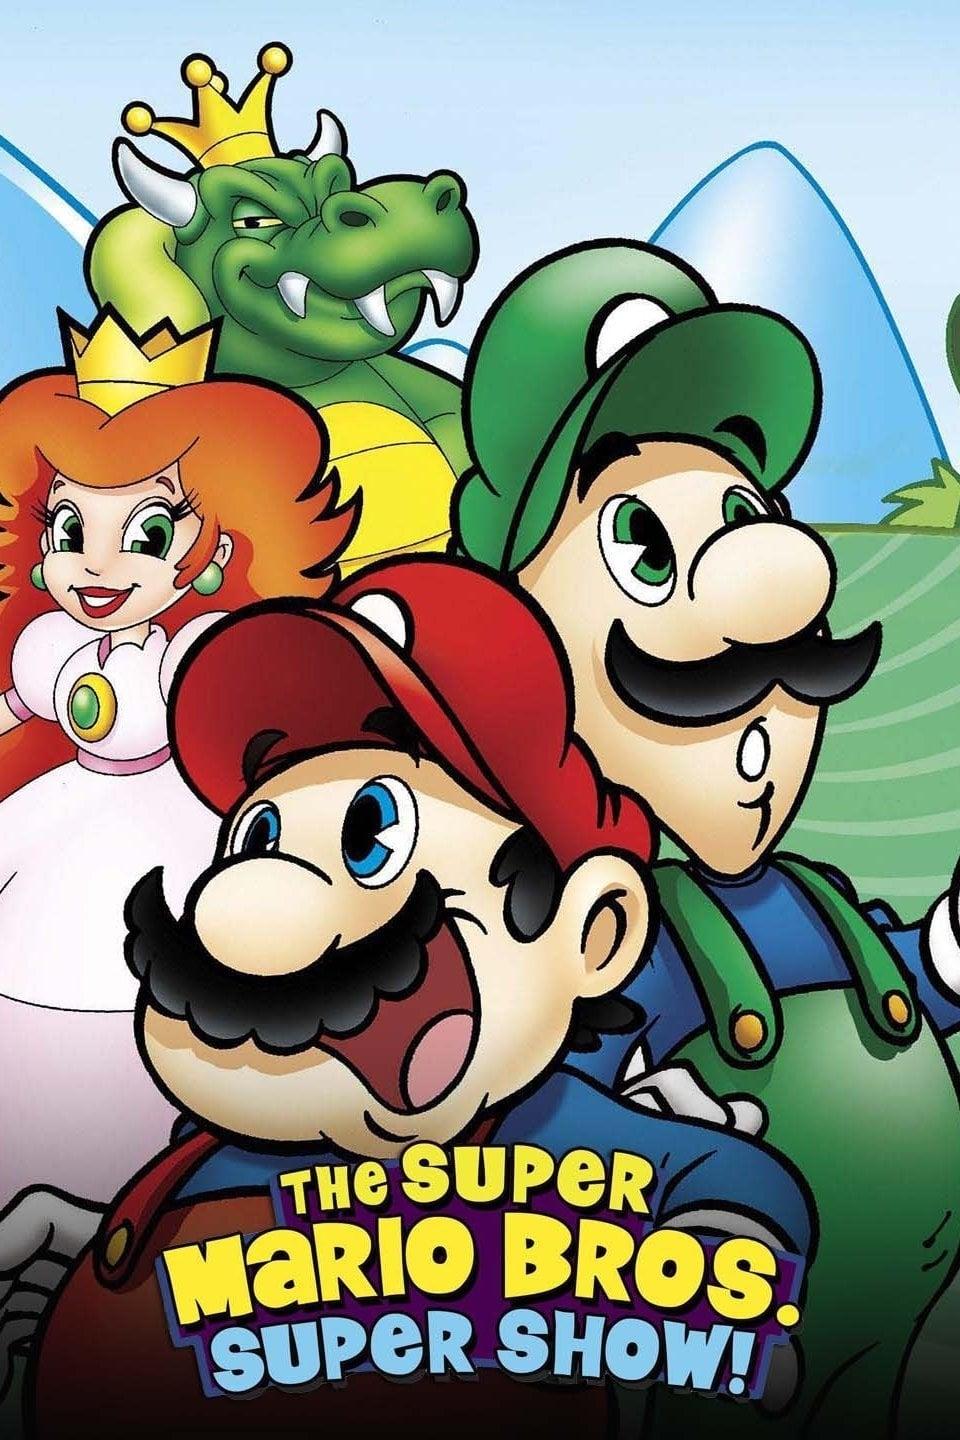 The Super Mario Bros. Super Show! poster